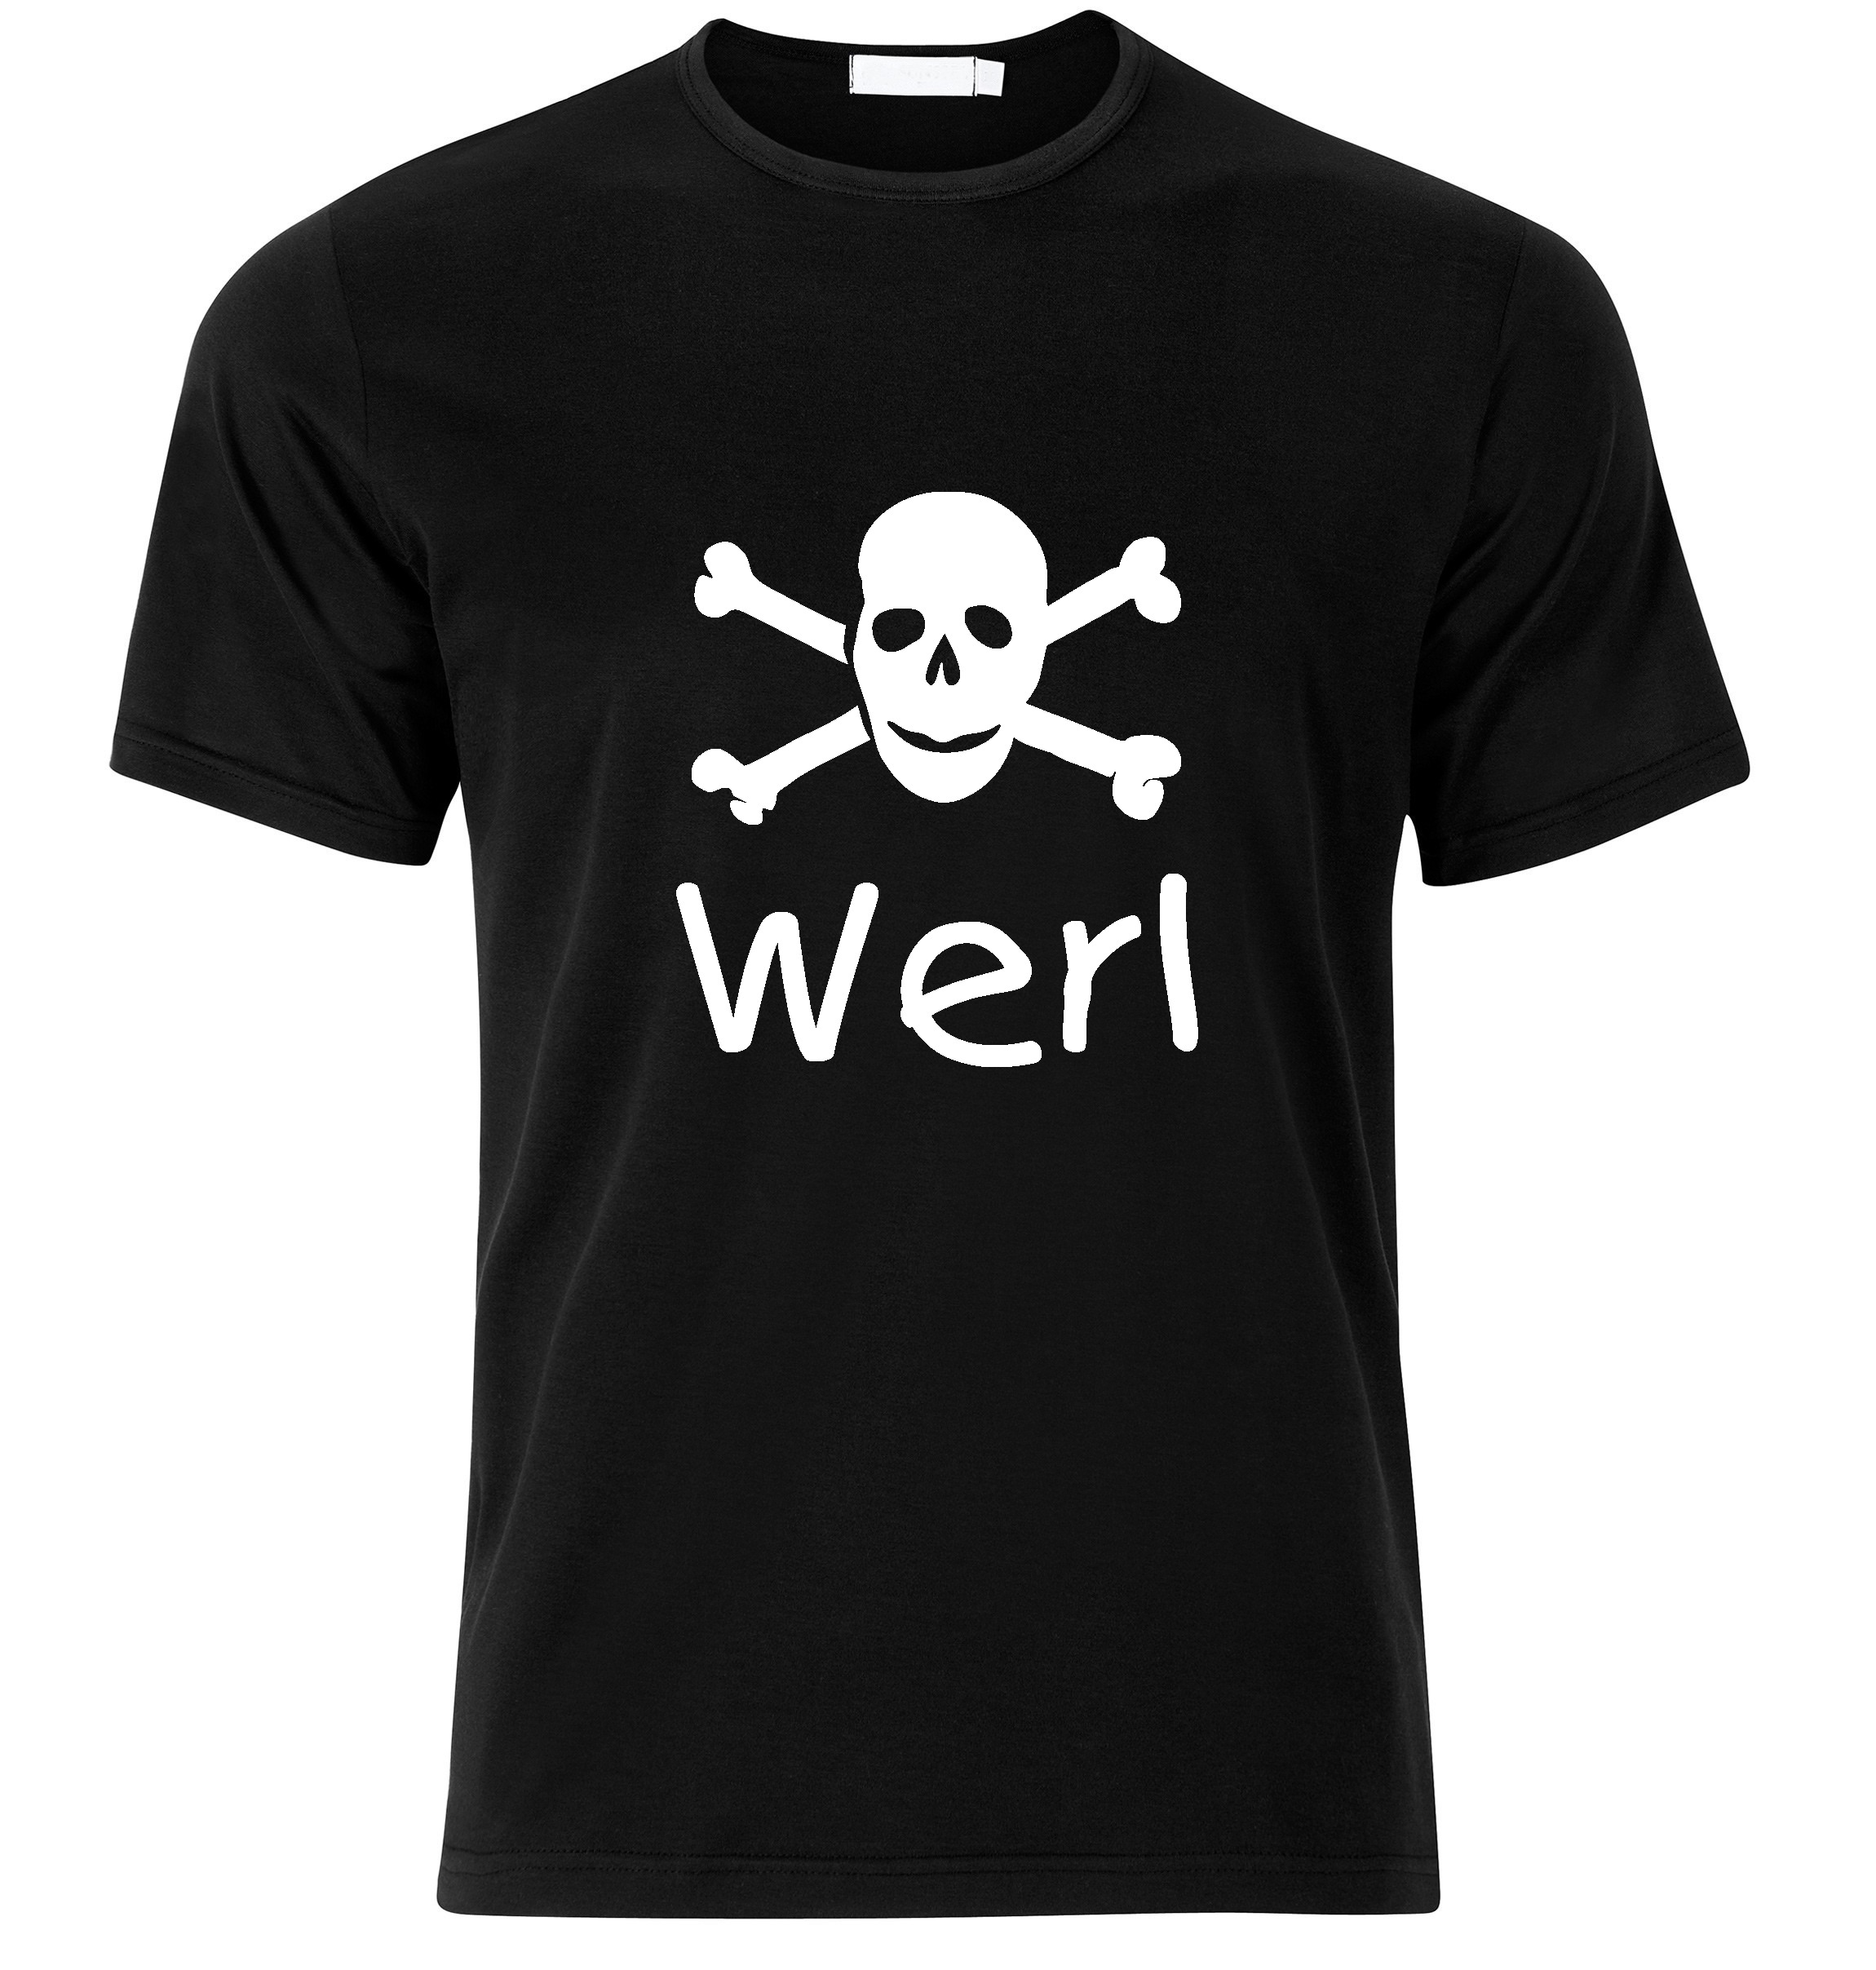 T-Shirt Werl Jolly Roger, Totenkopf